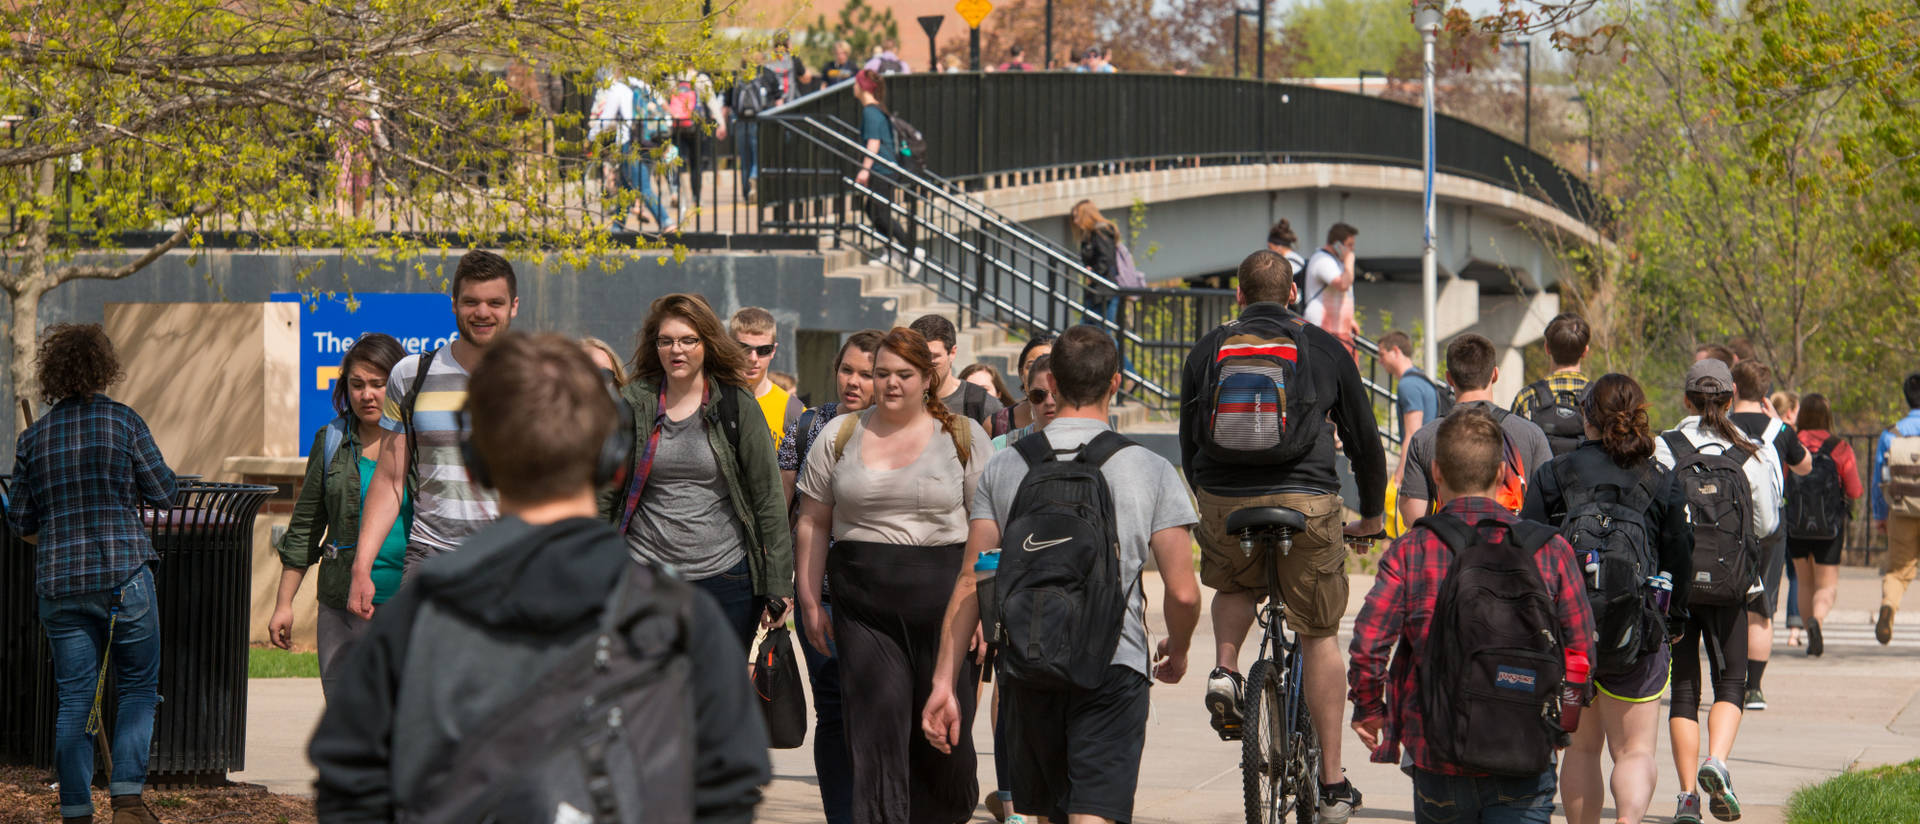 Students walking on campus sidewalks and the campus footbridge